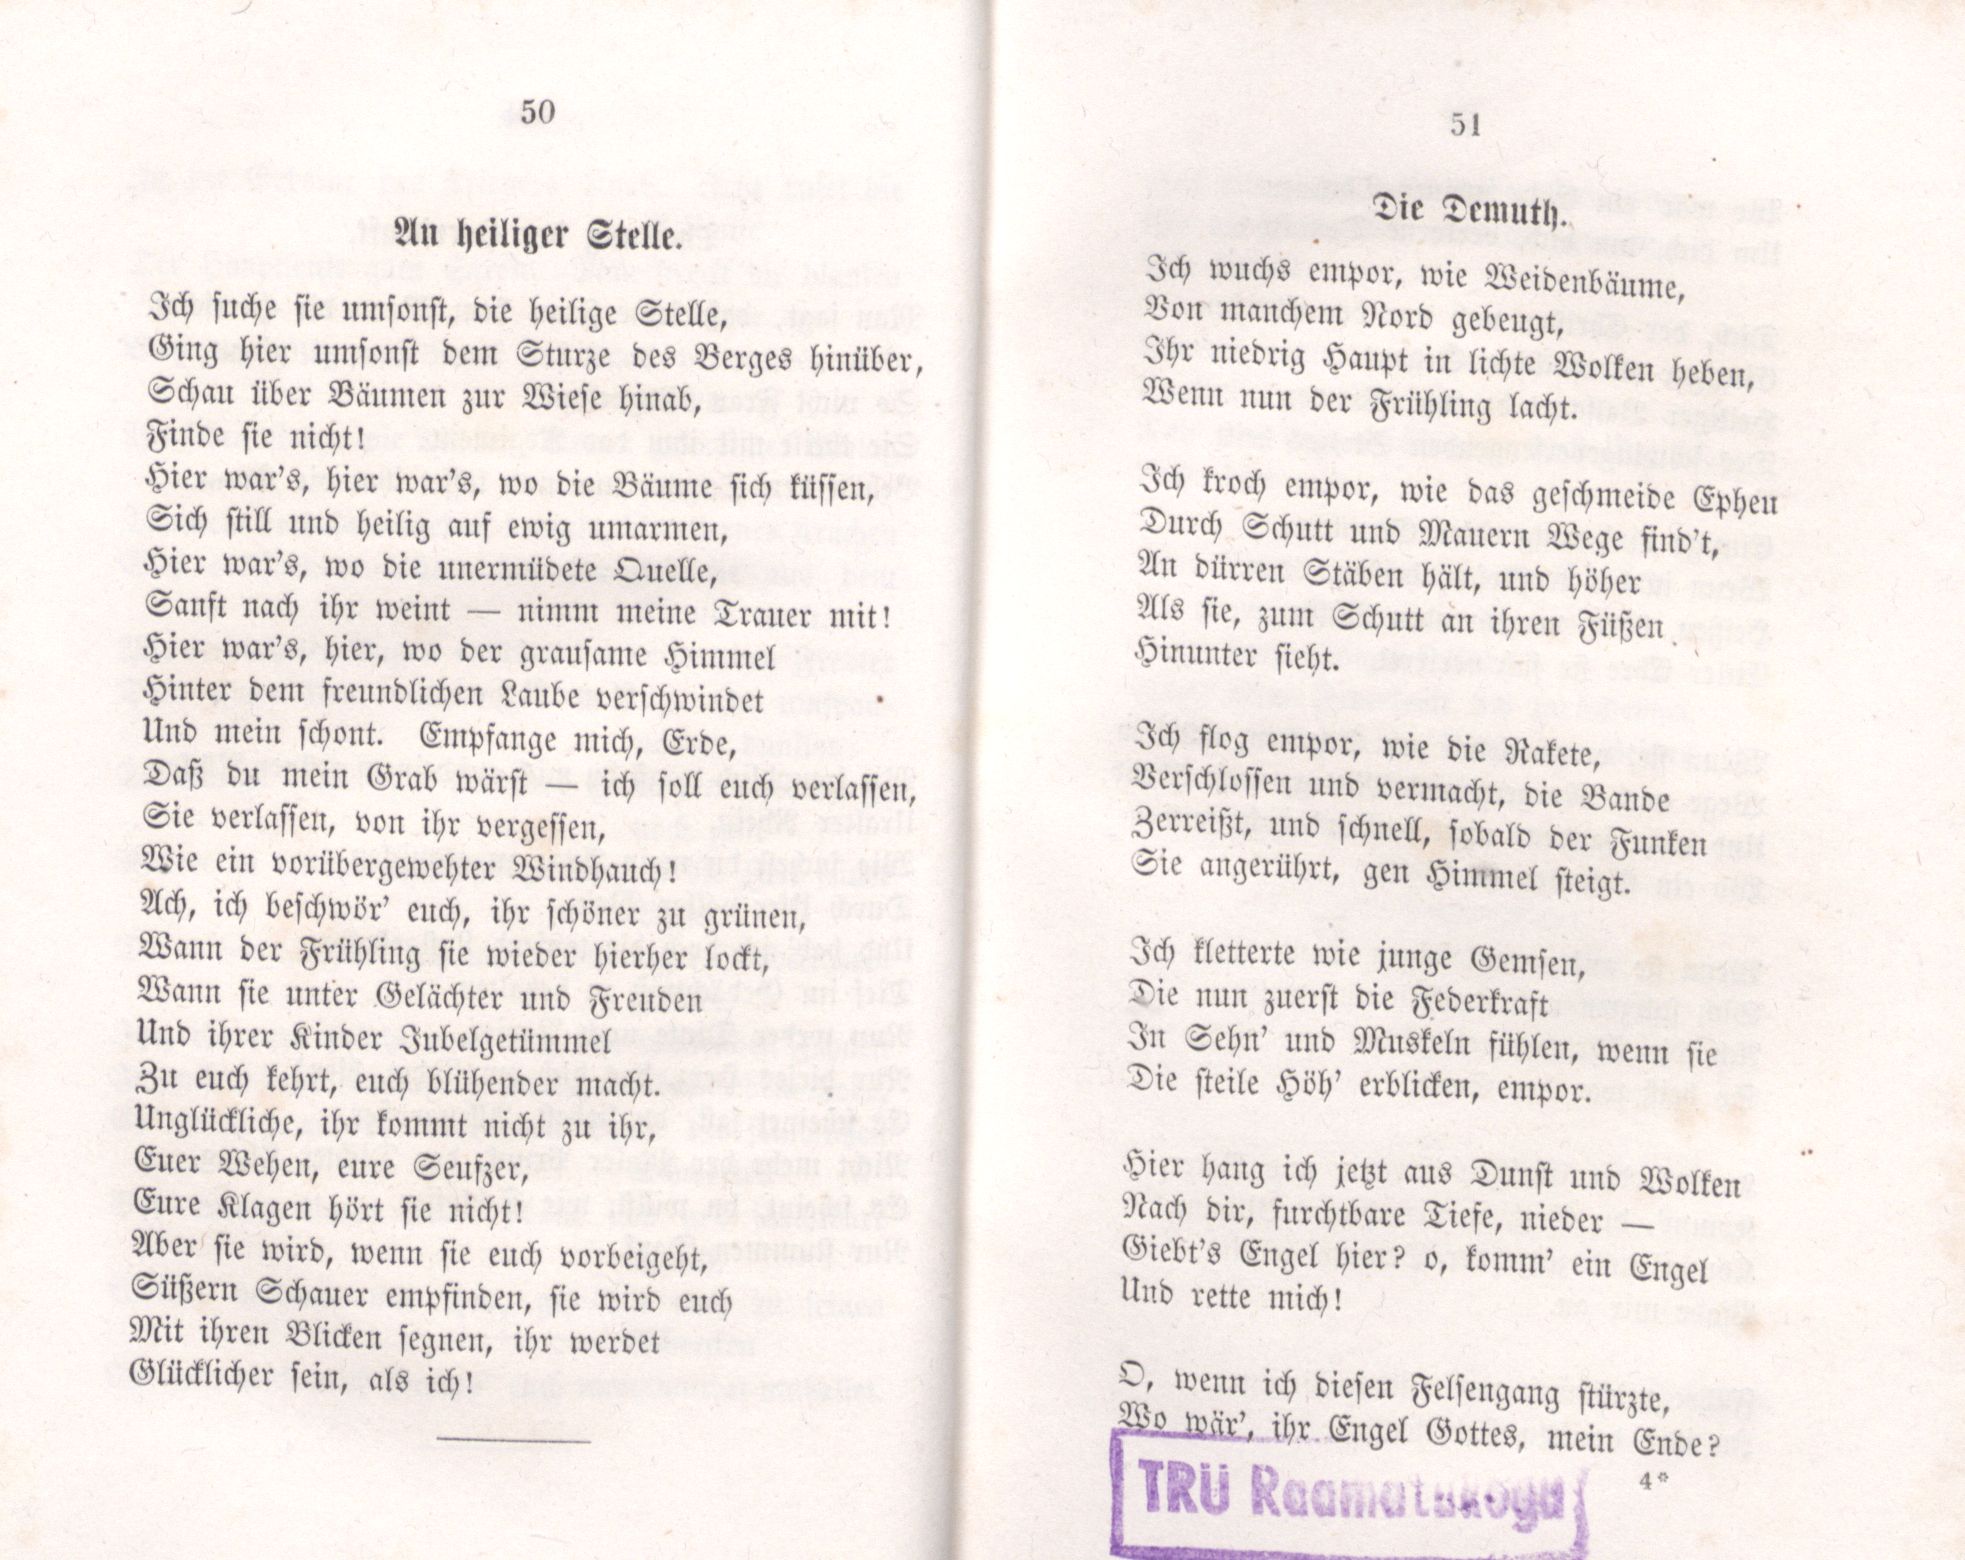 Die Demuth (1855) | 1. (50-51) Main body of text